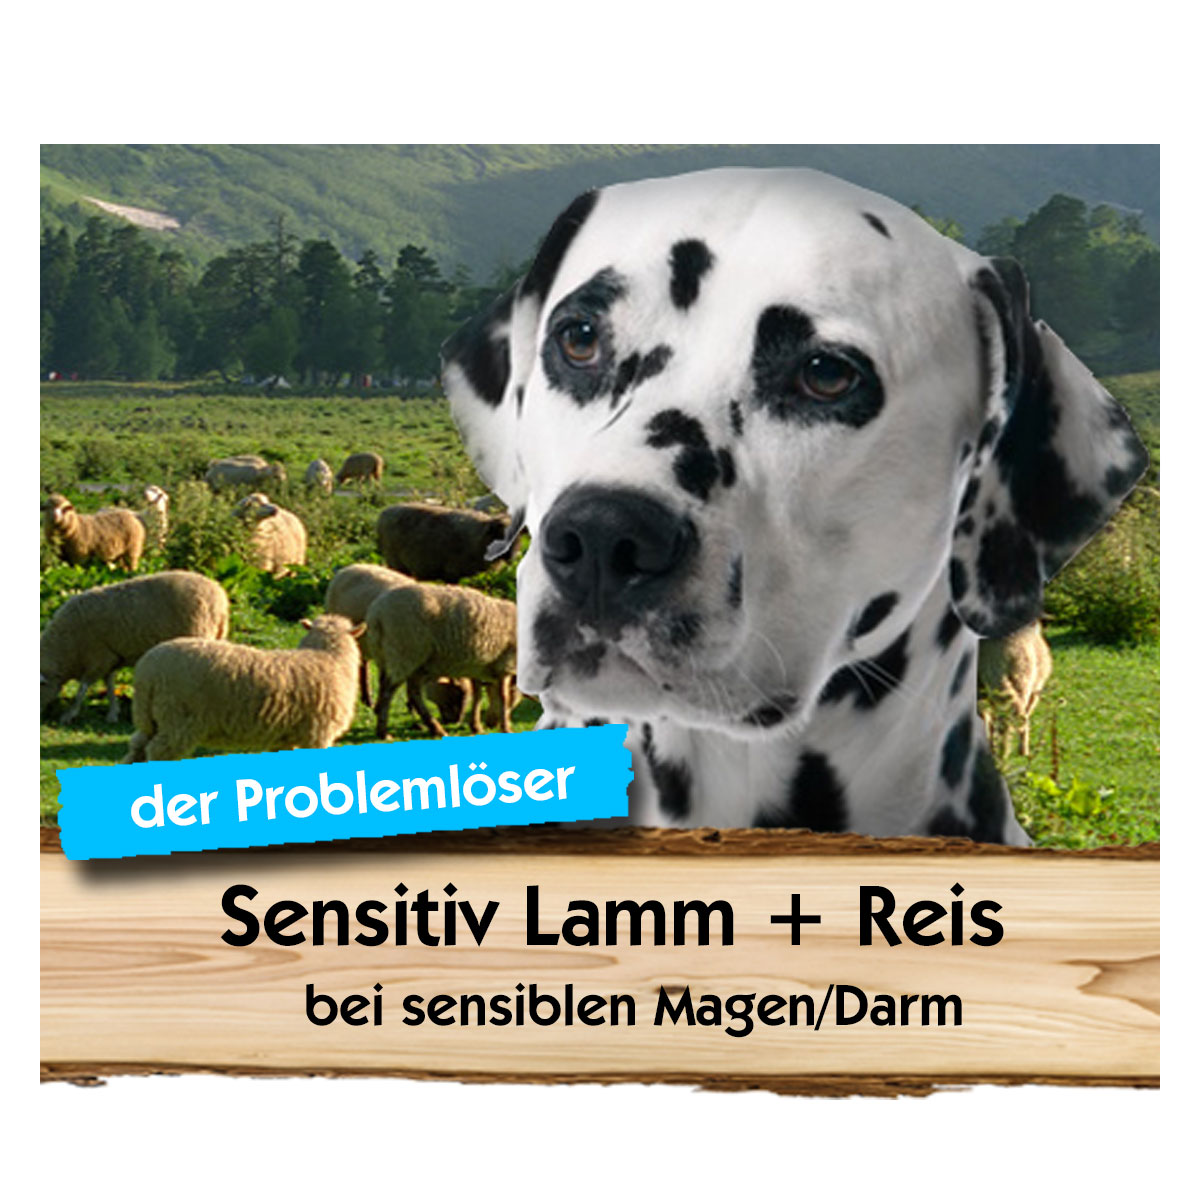 Sensitiv Lamm + Reis